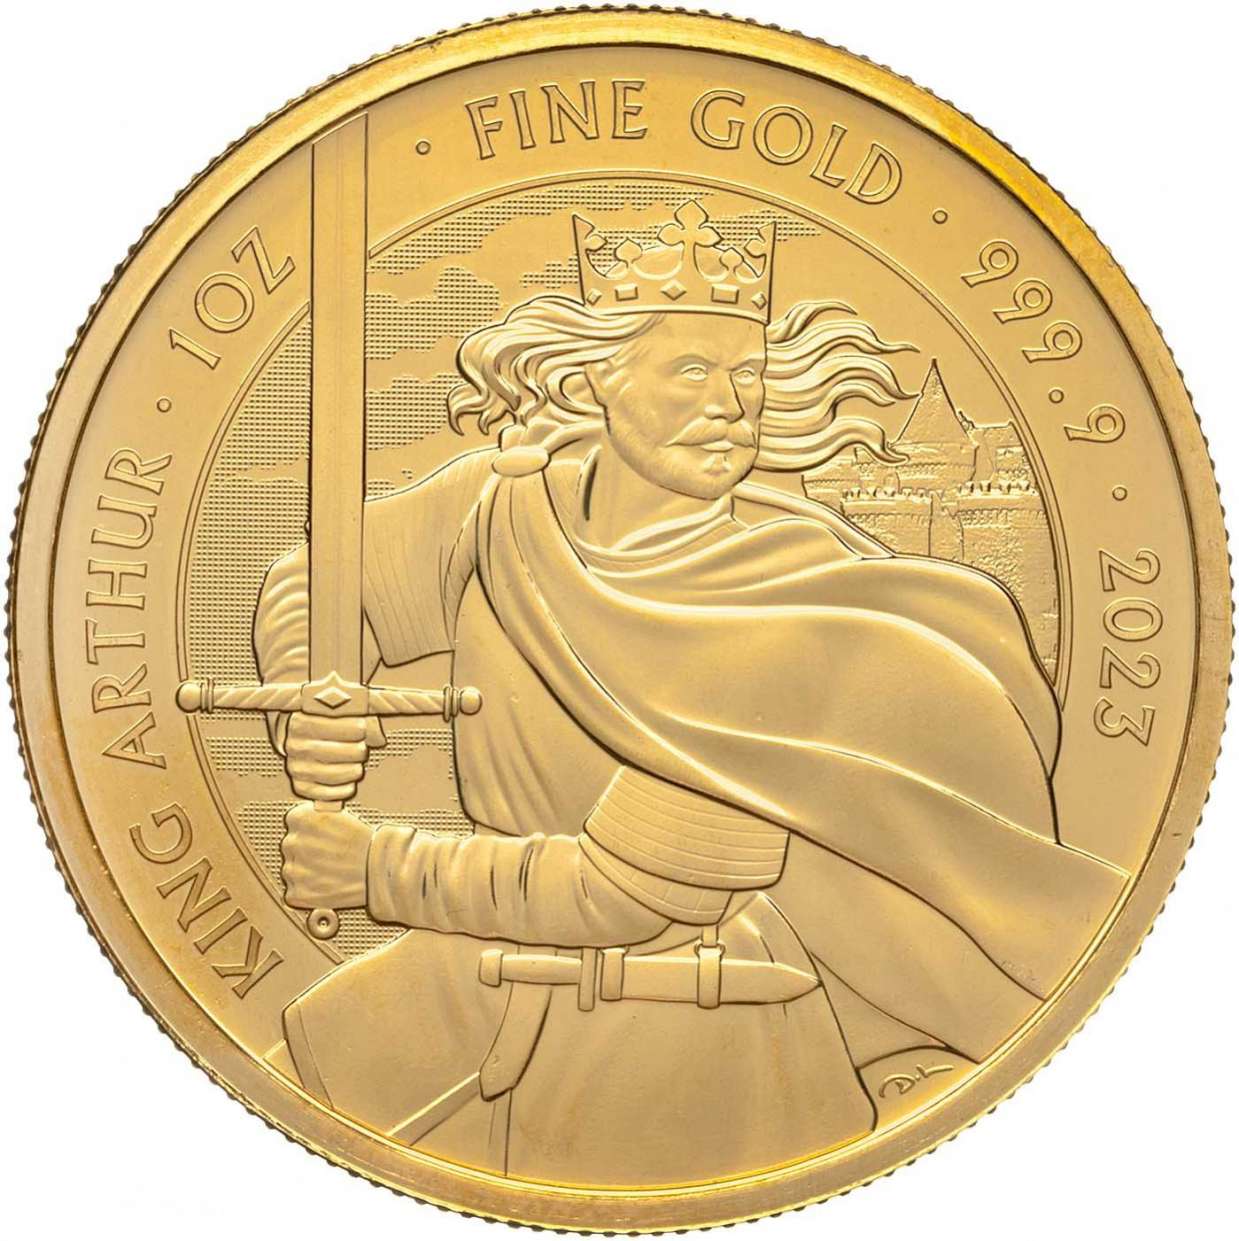 The Royal Mint's Myths & Legends Series